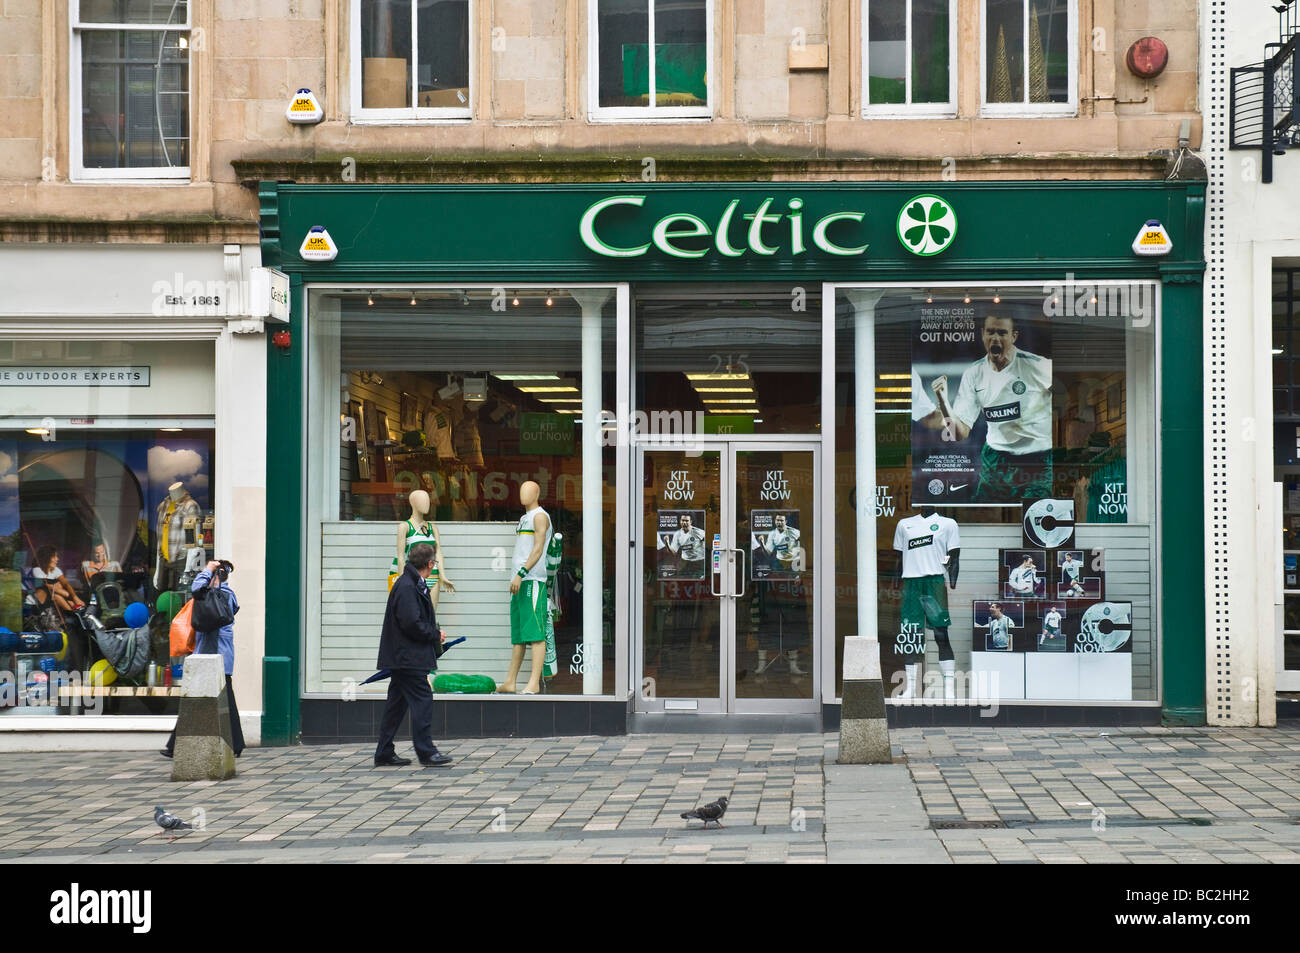 dh Celtic FC Football club shop SAUCHIEHALL STREET GLASGOW Sauchiehall street soccer clubs store front Stock Photo